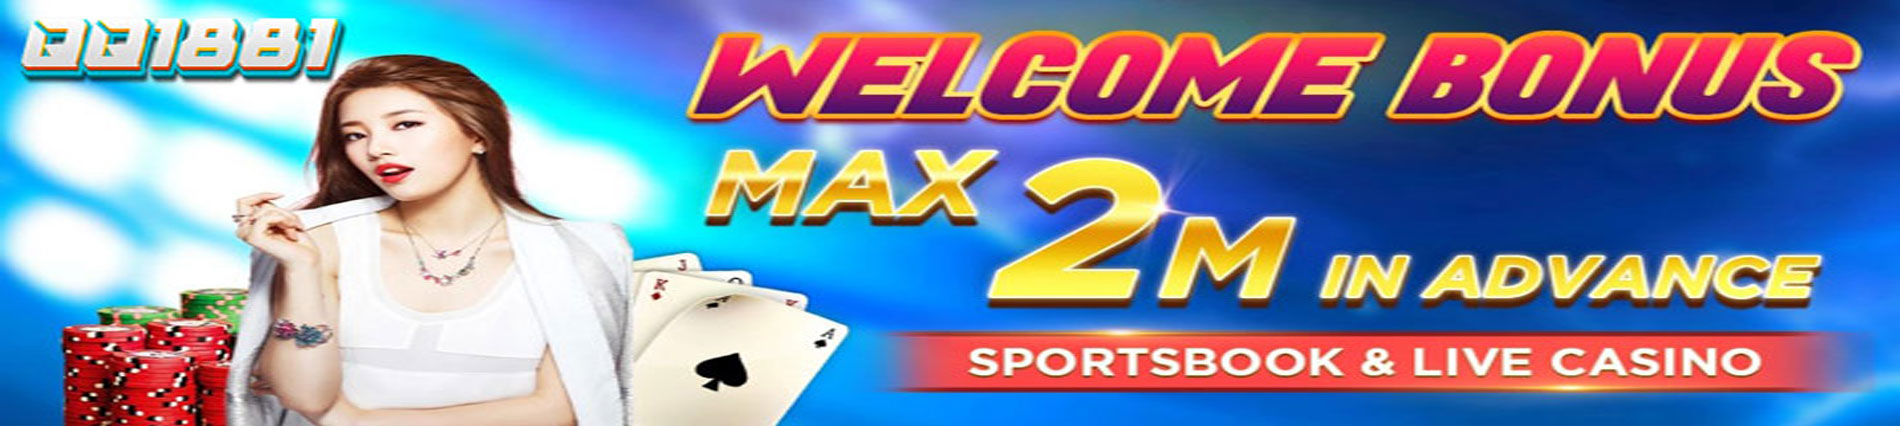 QQ1881 welcome bonus casino & sports max 2 juta